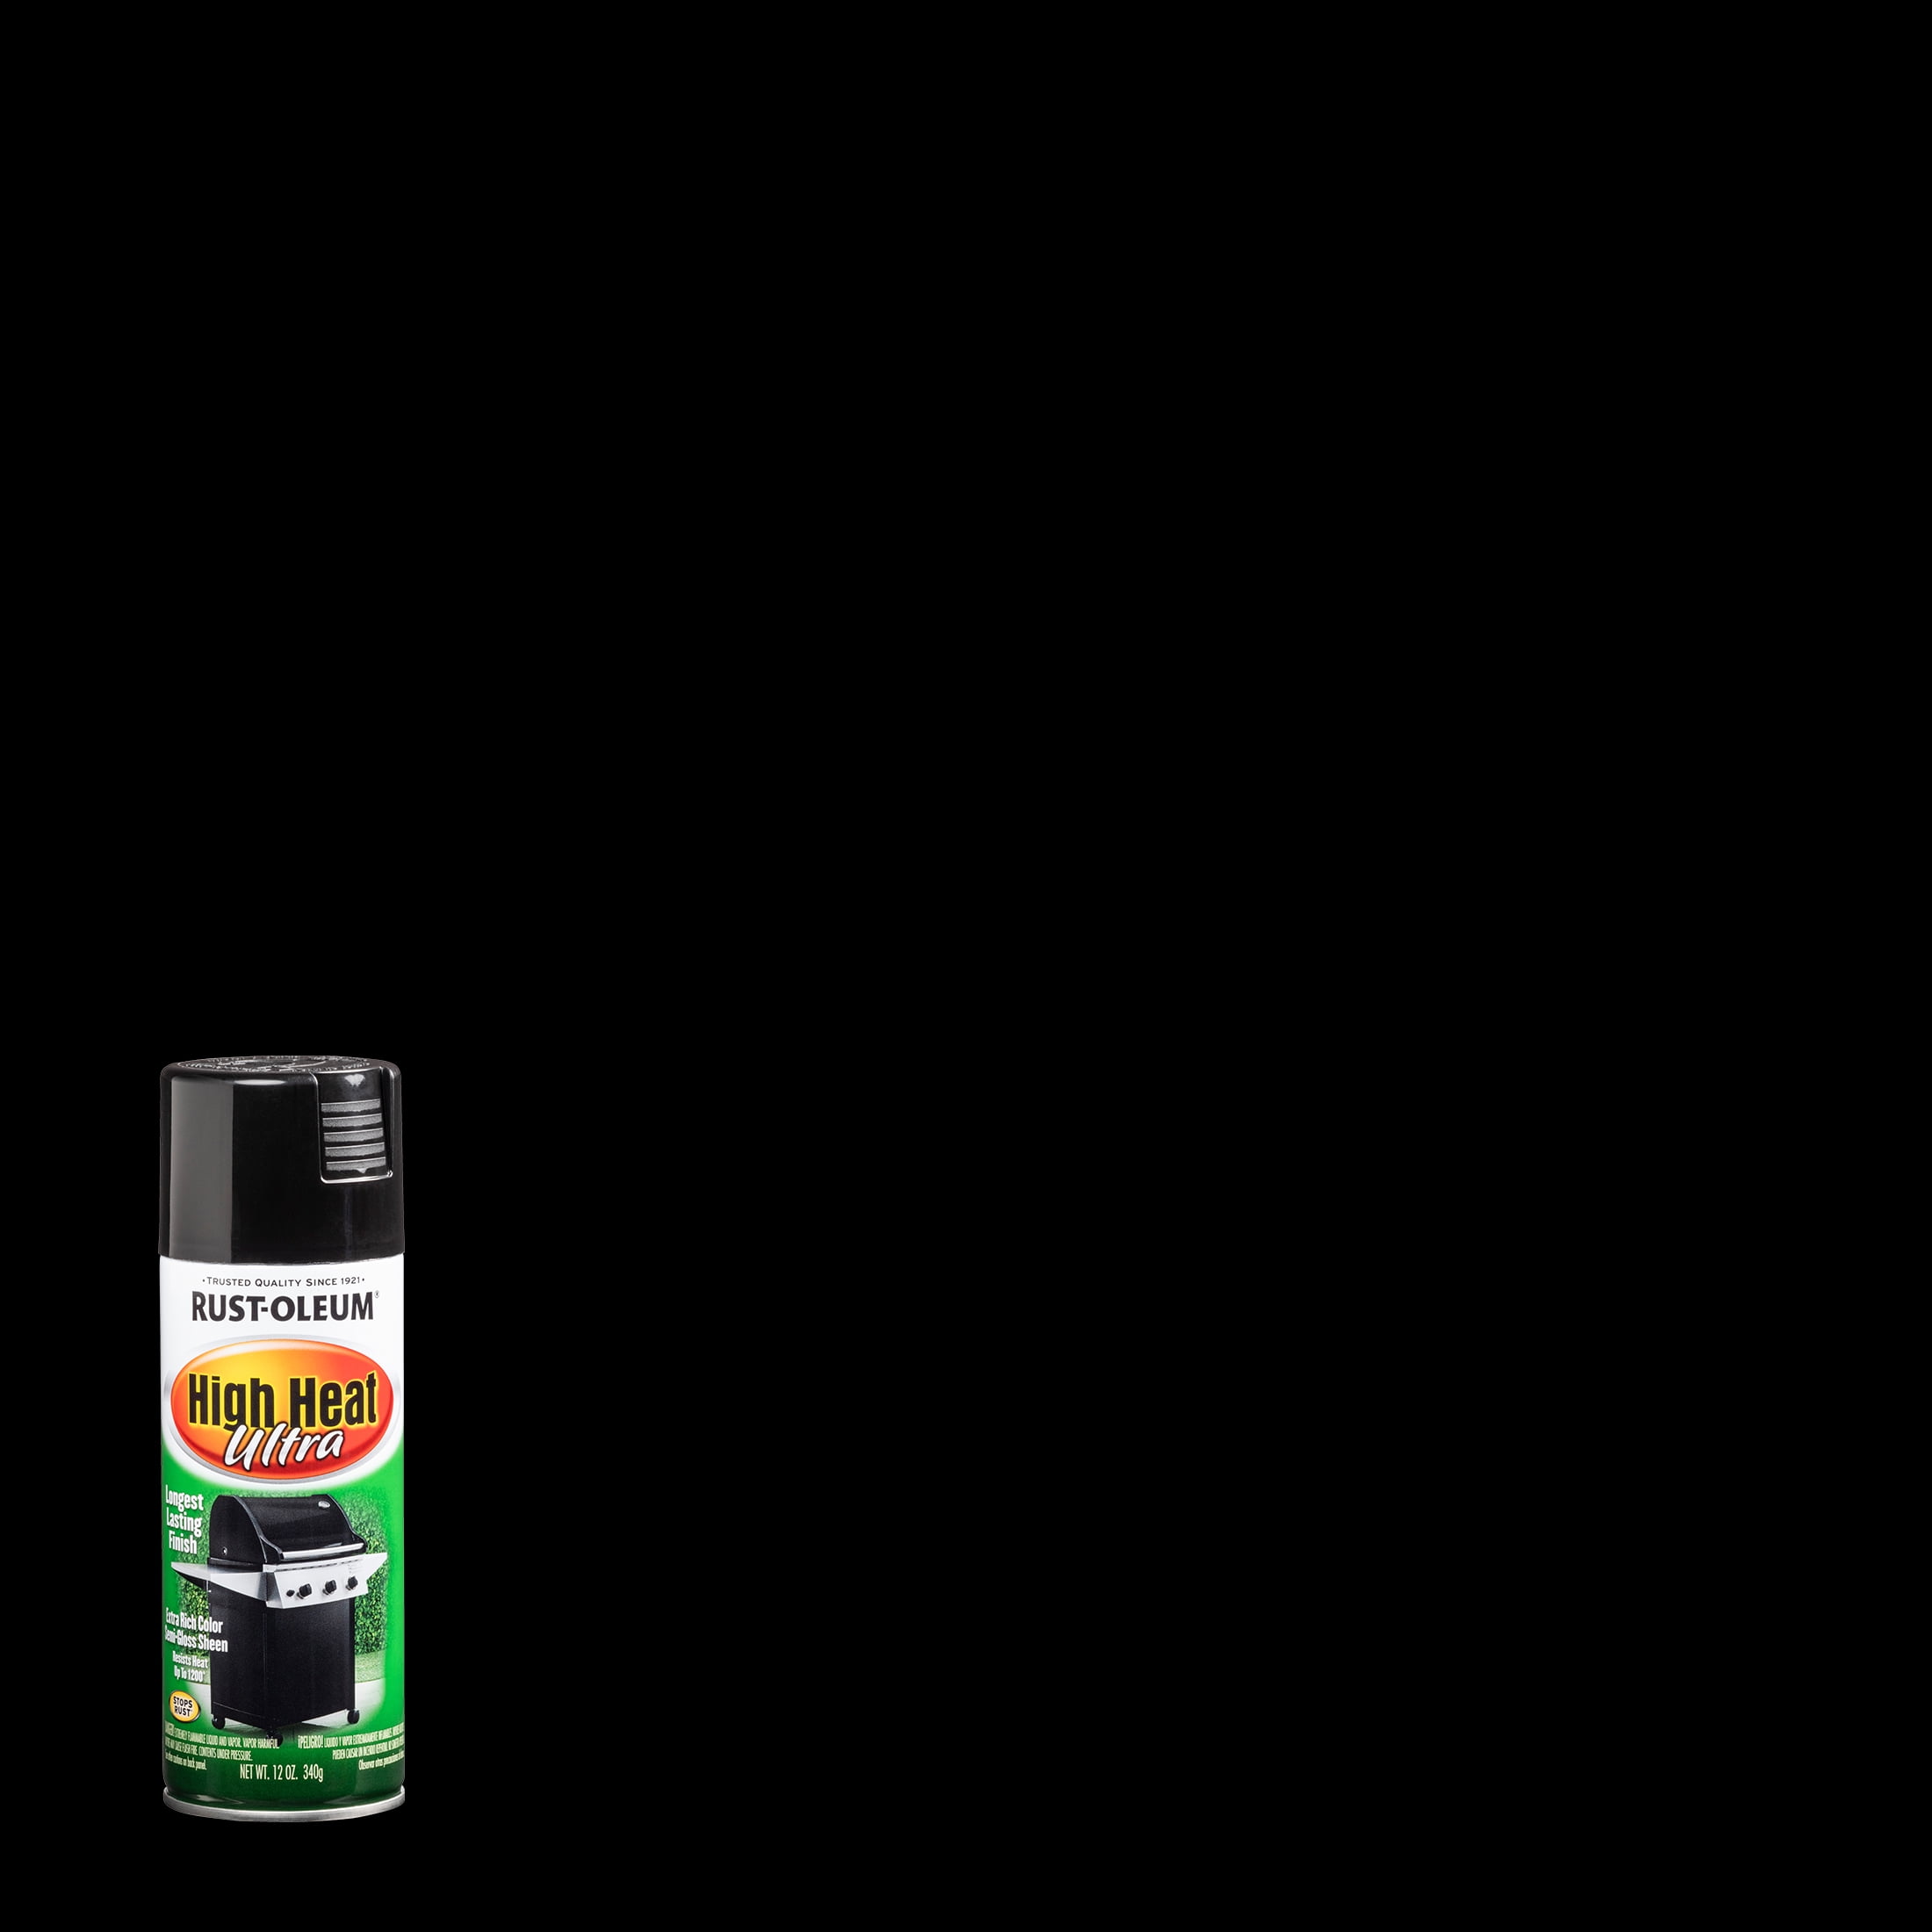 Bar-B-Que Black, Rust-Oleum Specialty High Heat Ultra Spray Paint-241169, 12 oz